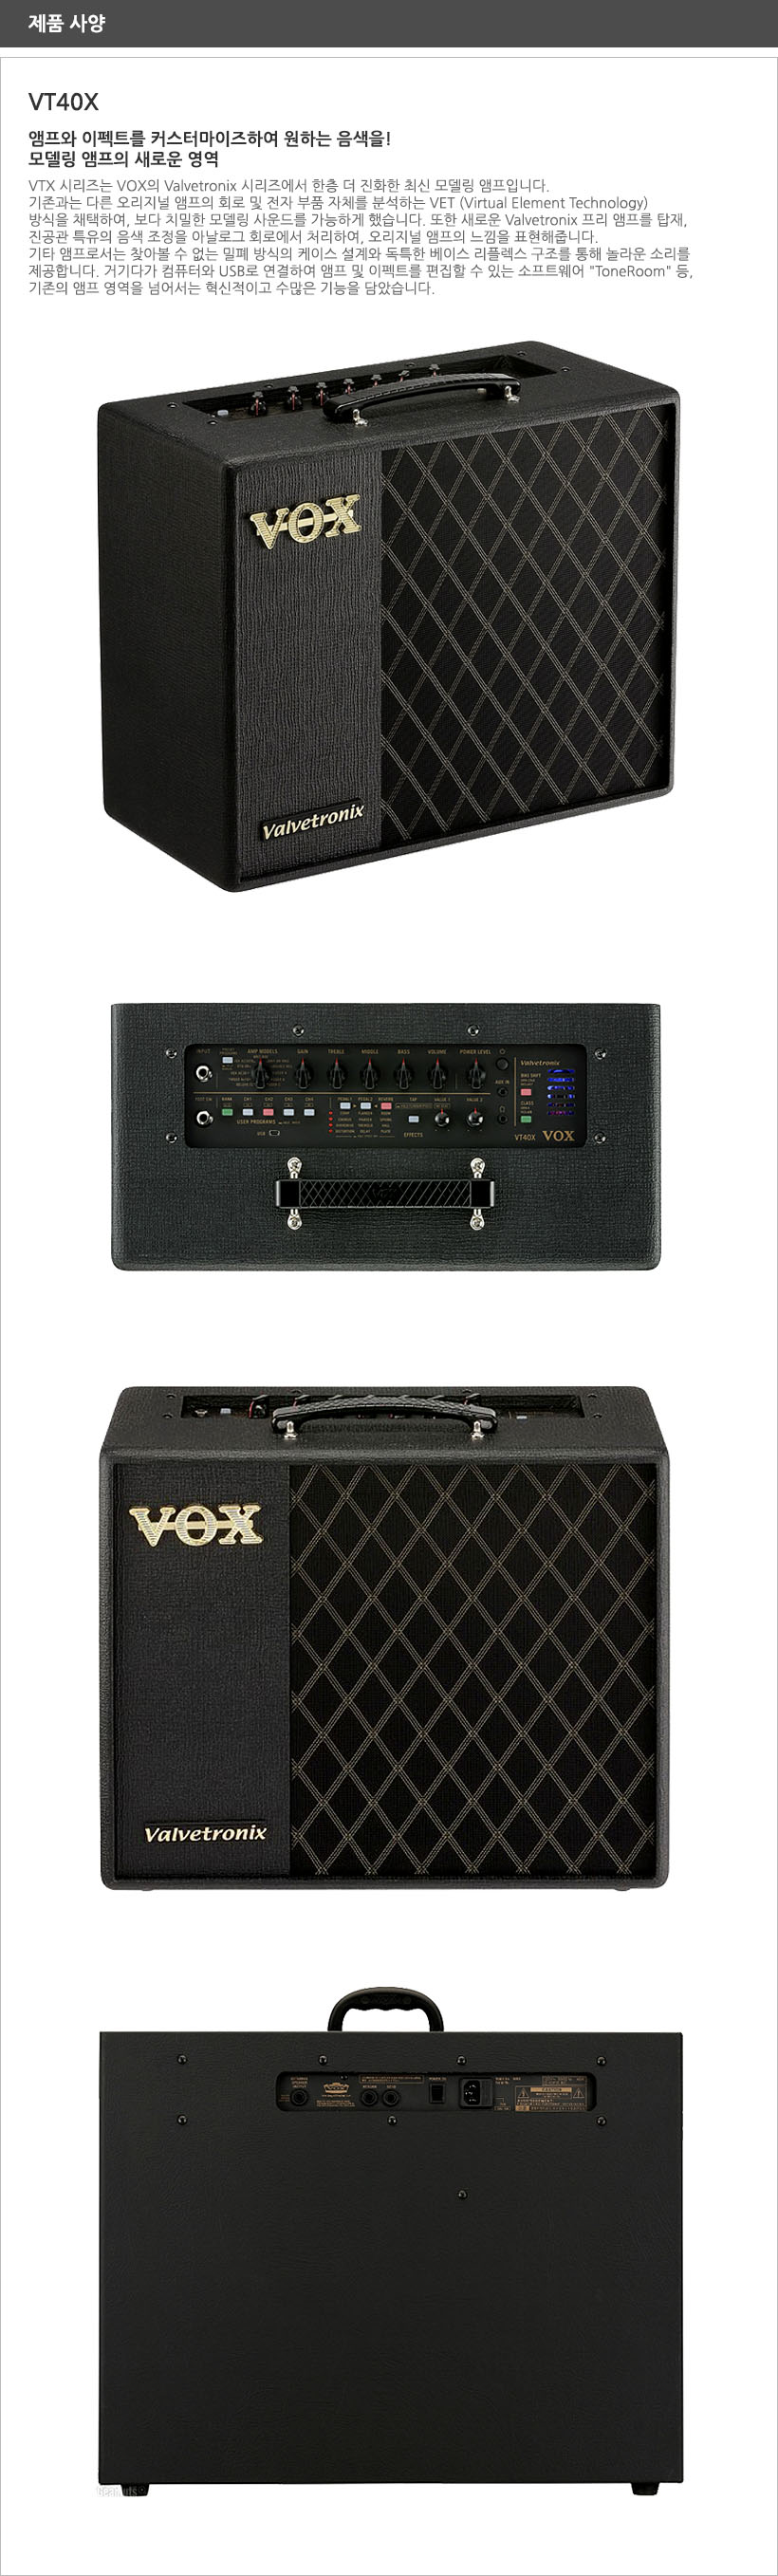 VT40X 제품구성